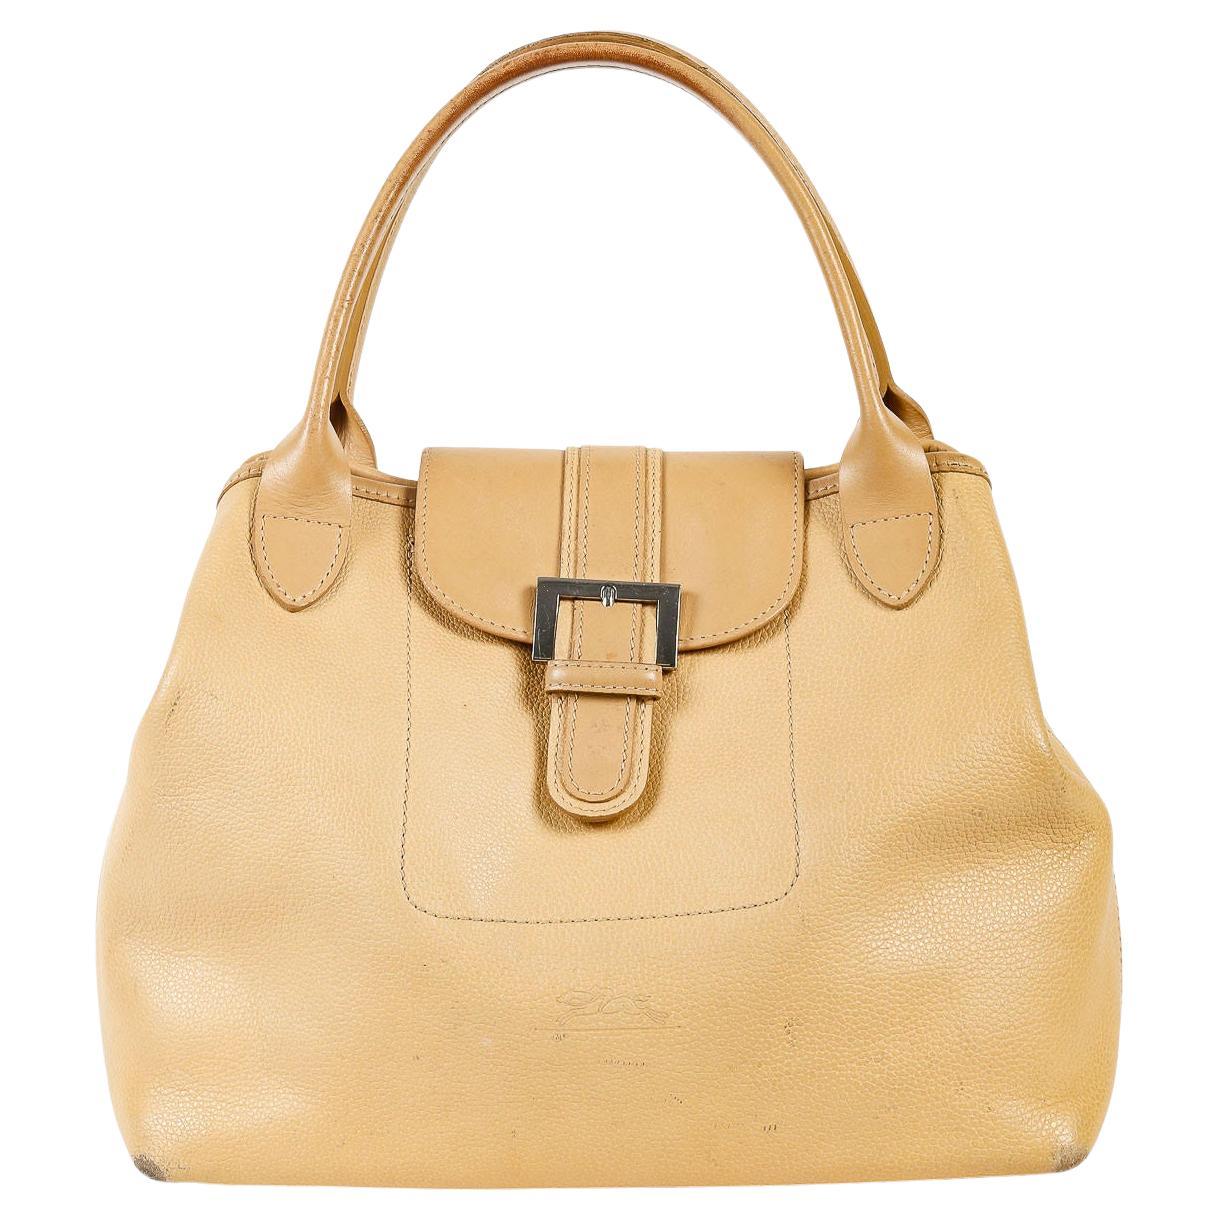 Handbag, Longchamp, Yellow Leather, Chrome Buckle, 20th Century.